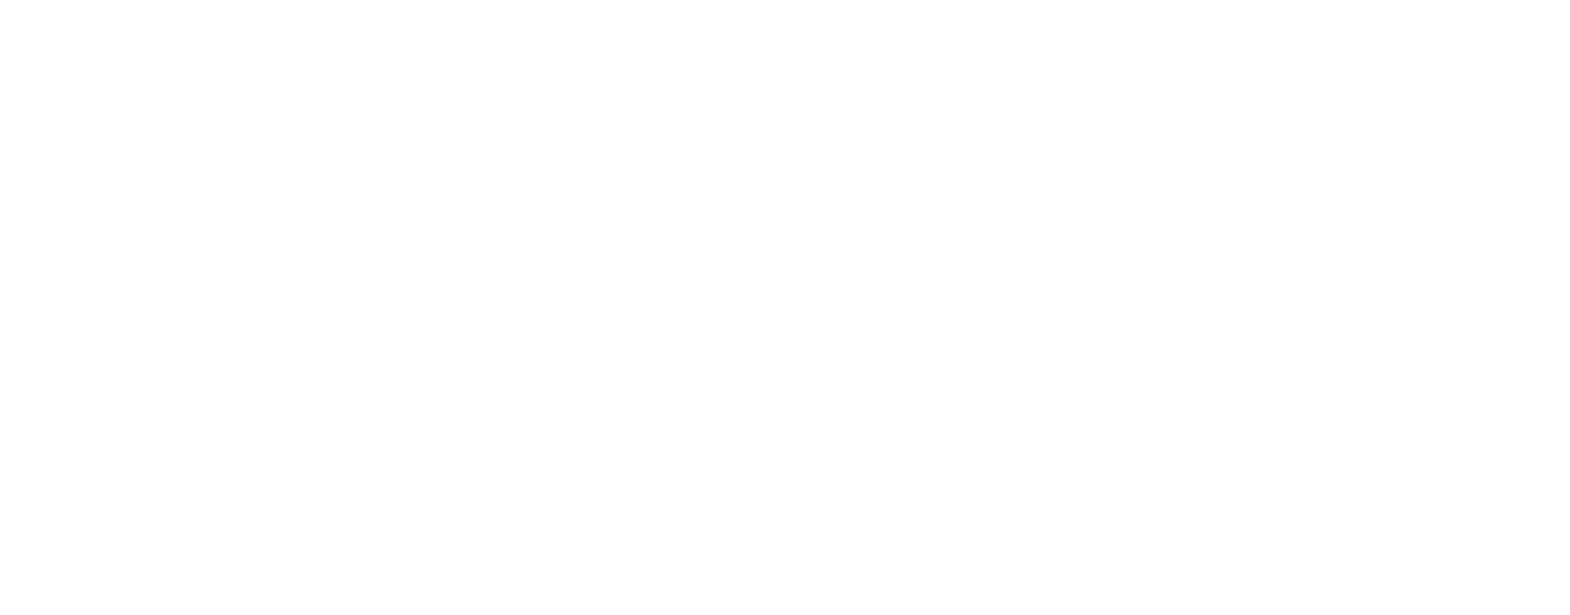 Asahi Group logo large for dark backgrounds (transparent PNG)